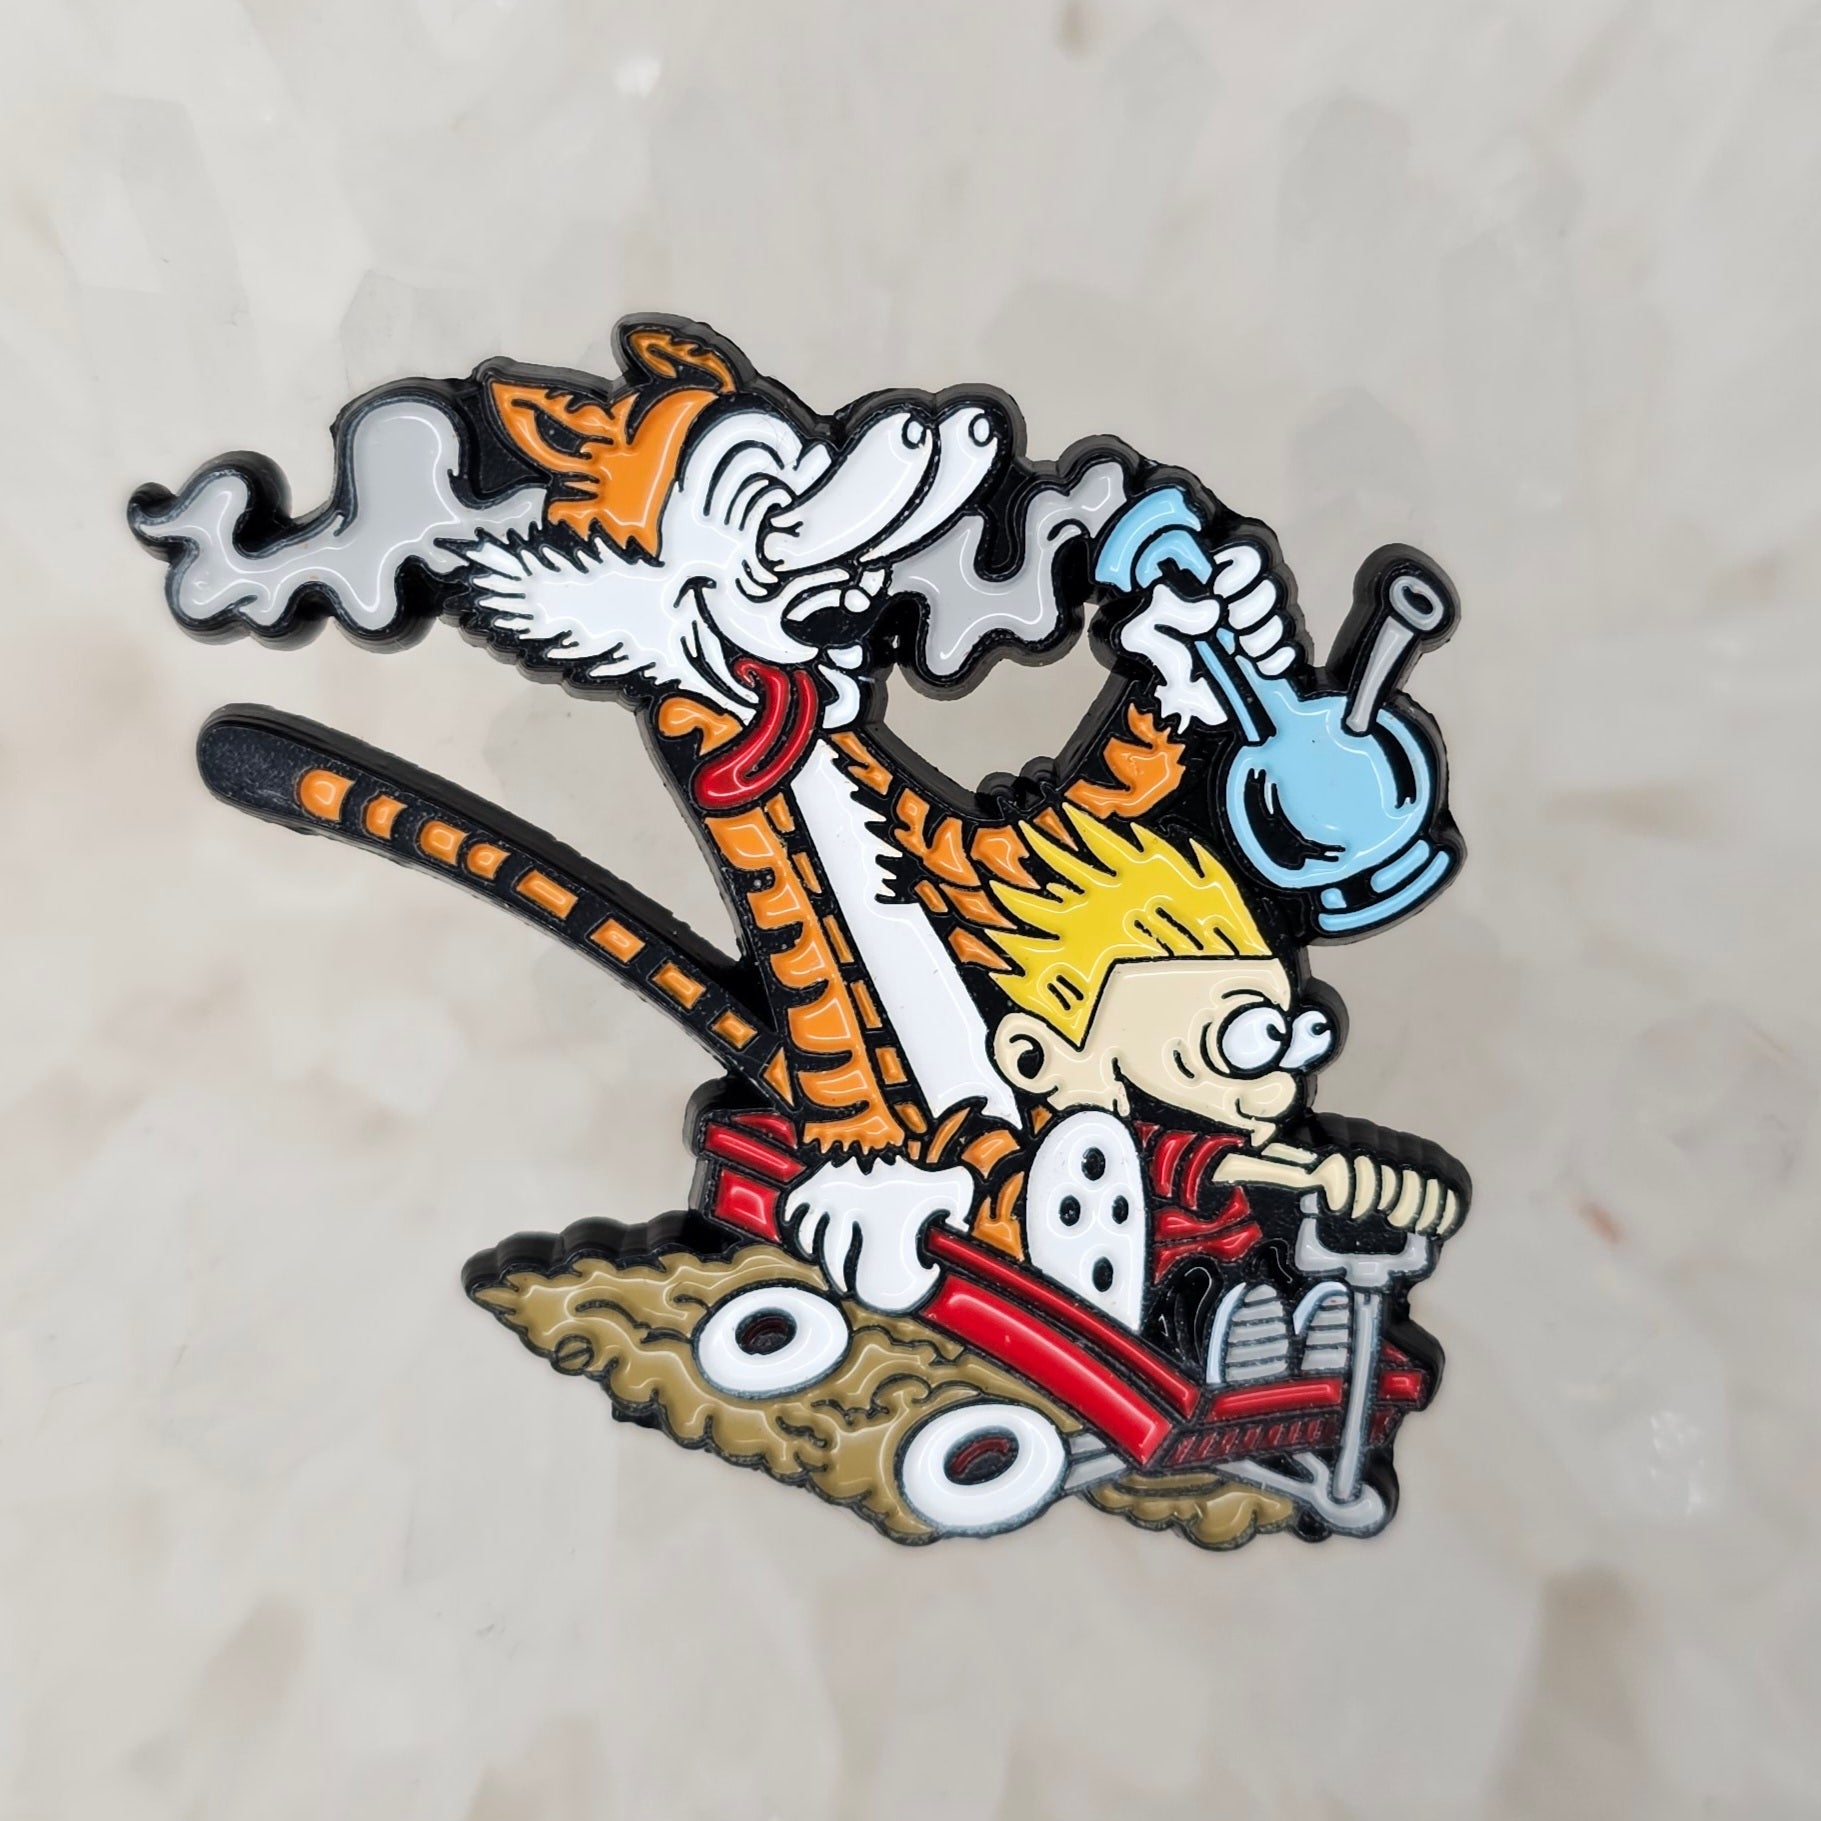 Calvin Wagon Ride Stoner Hobbes Weed 90s Cartoon Enamel Pins Hat Pins Lapel Pin Brooch Badge Festival Pin